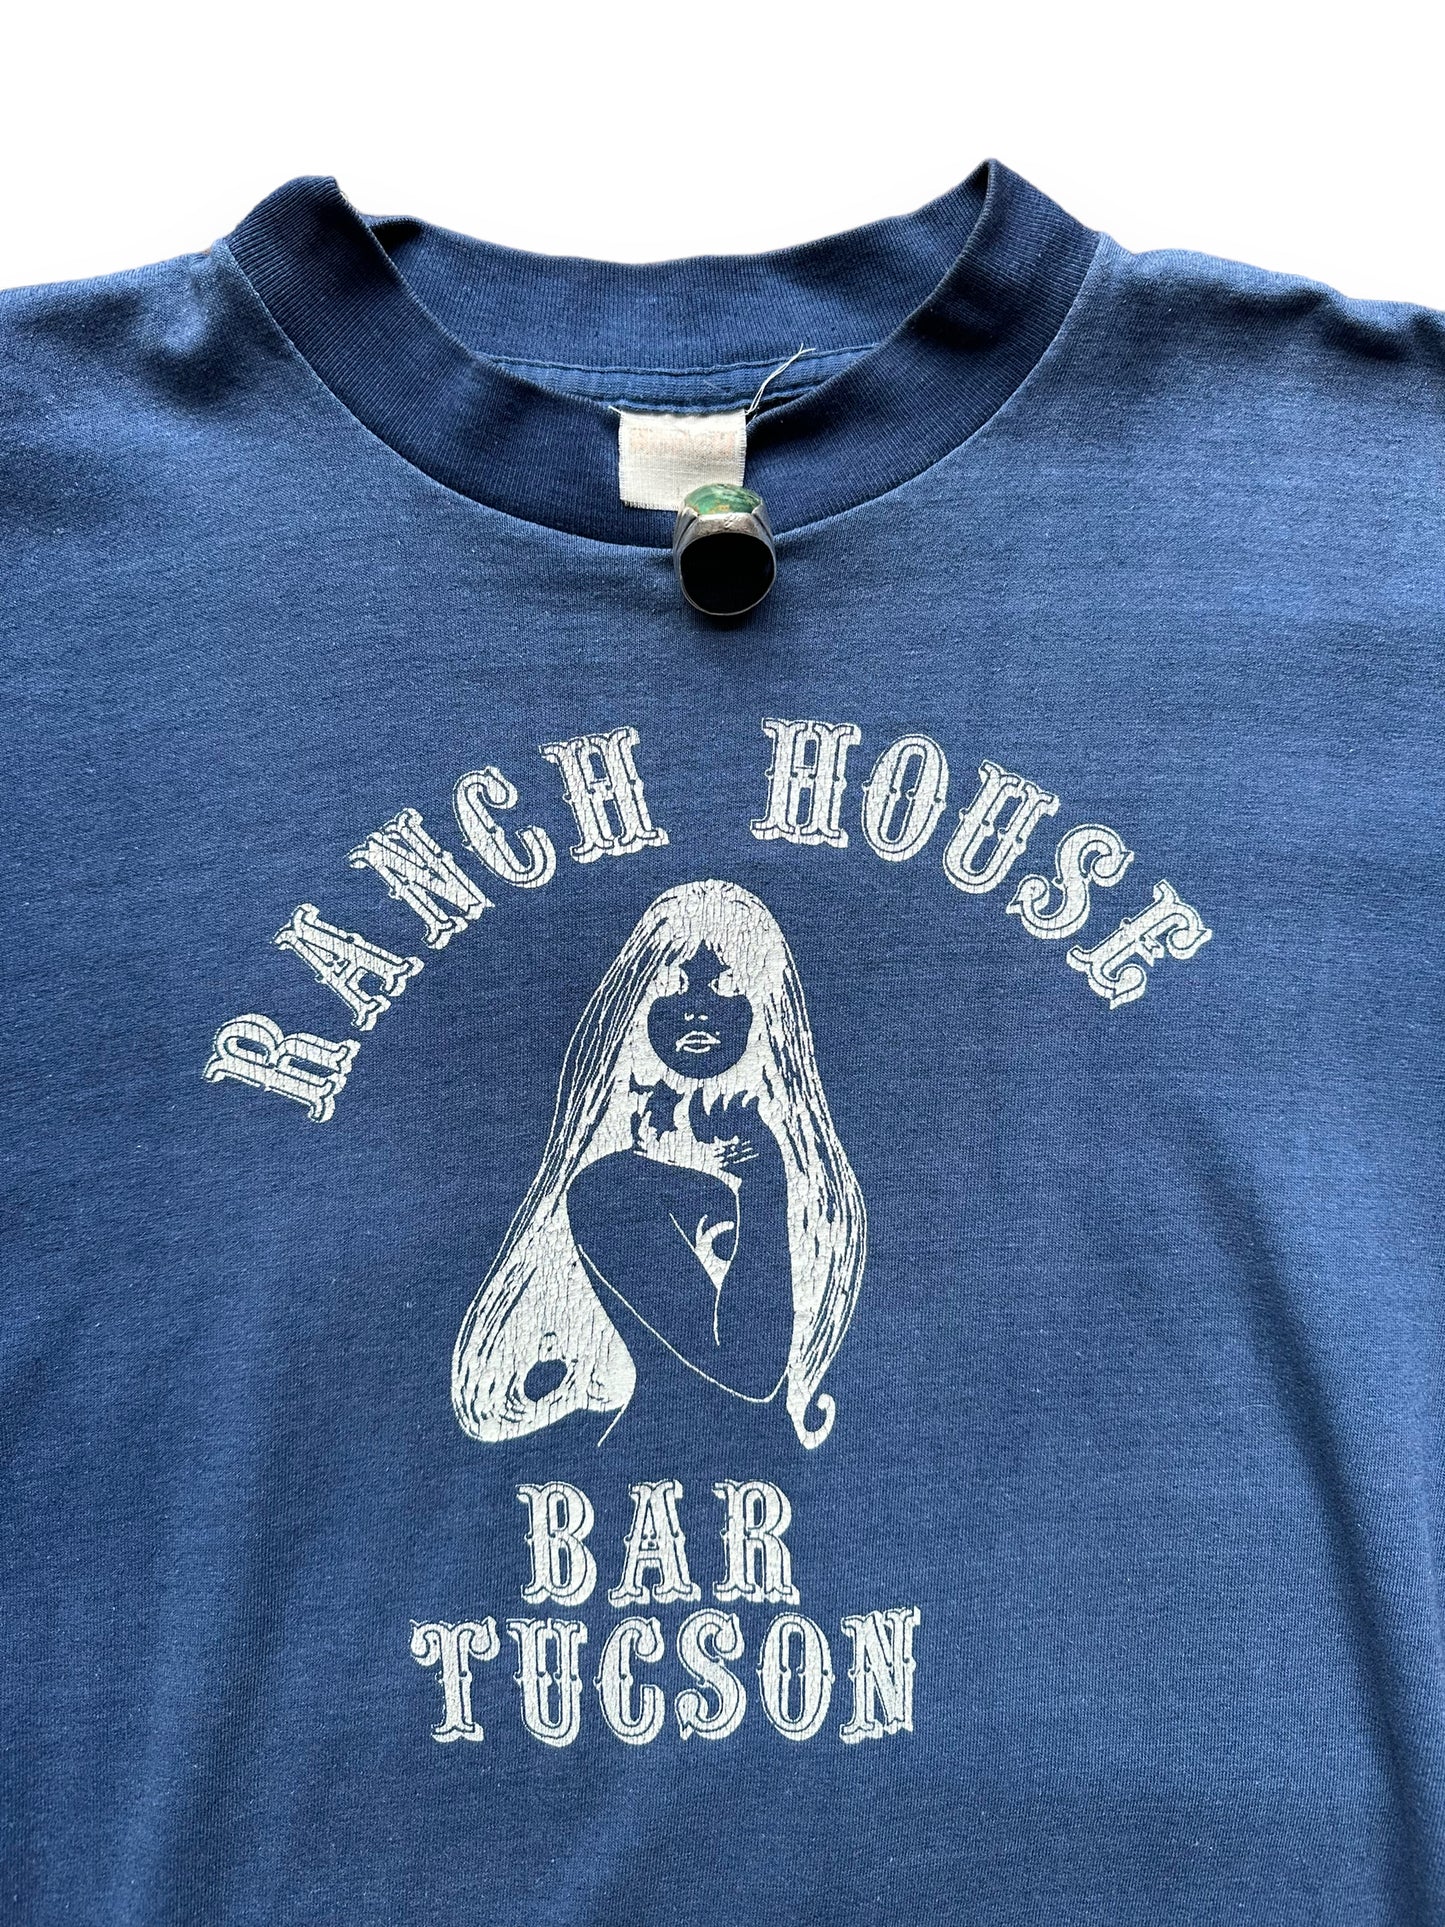 Tag View of Vintage Ranch House Bar Tucson Tee SZ L | Vintage Nudie Bar T-Shirts Seattle | Barn Owl Vintage Tees Seattle